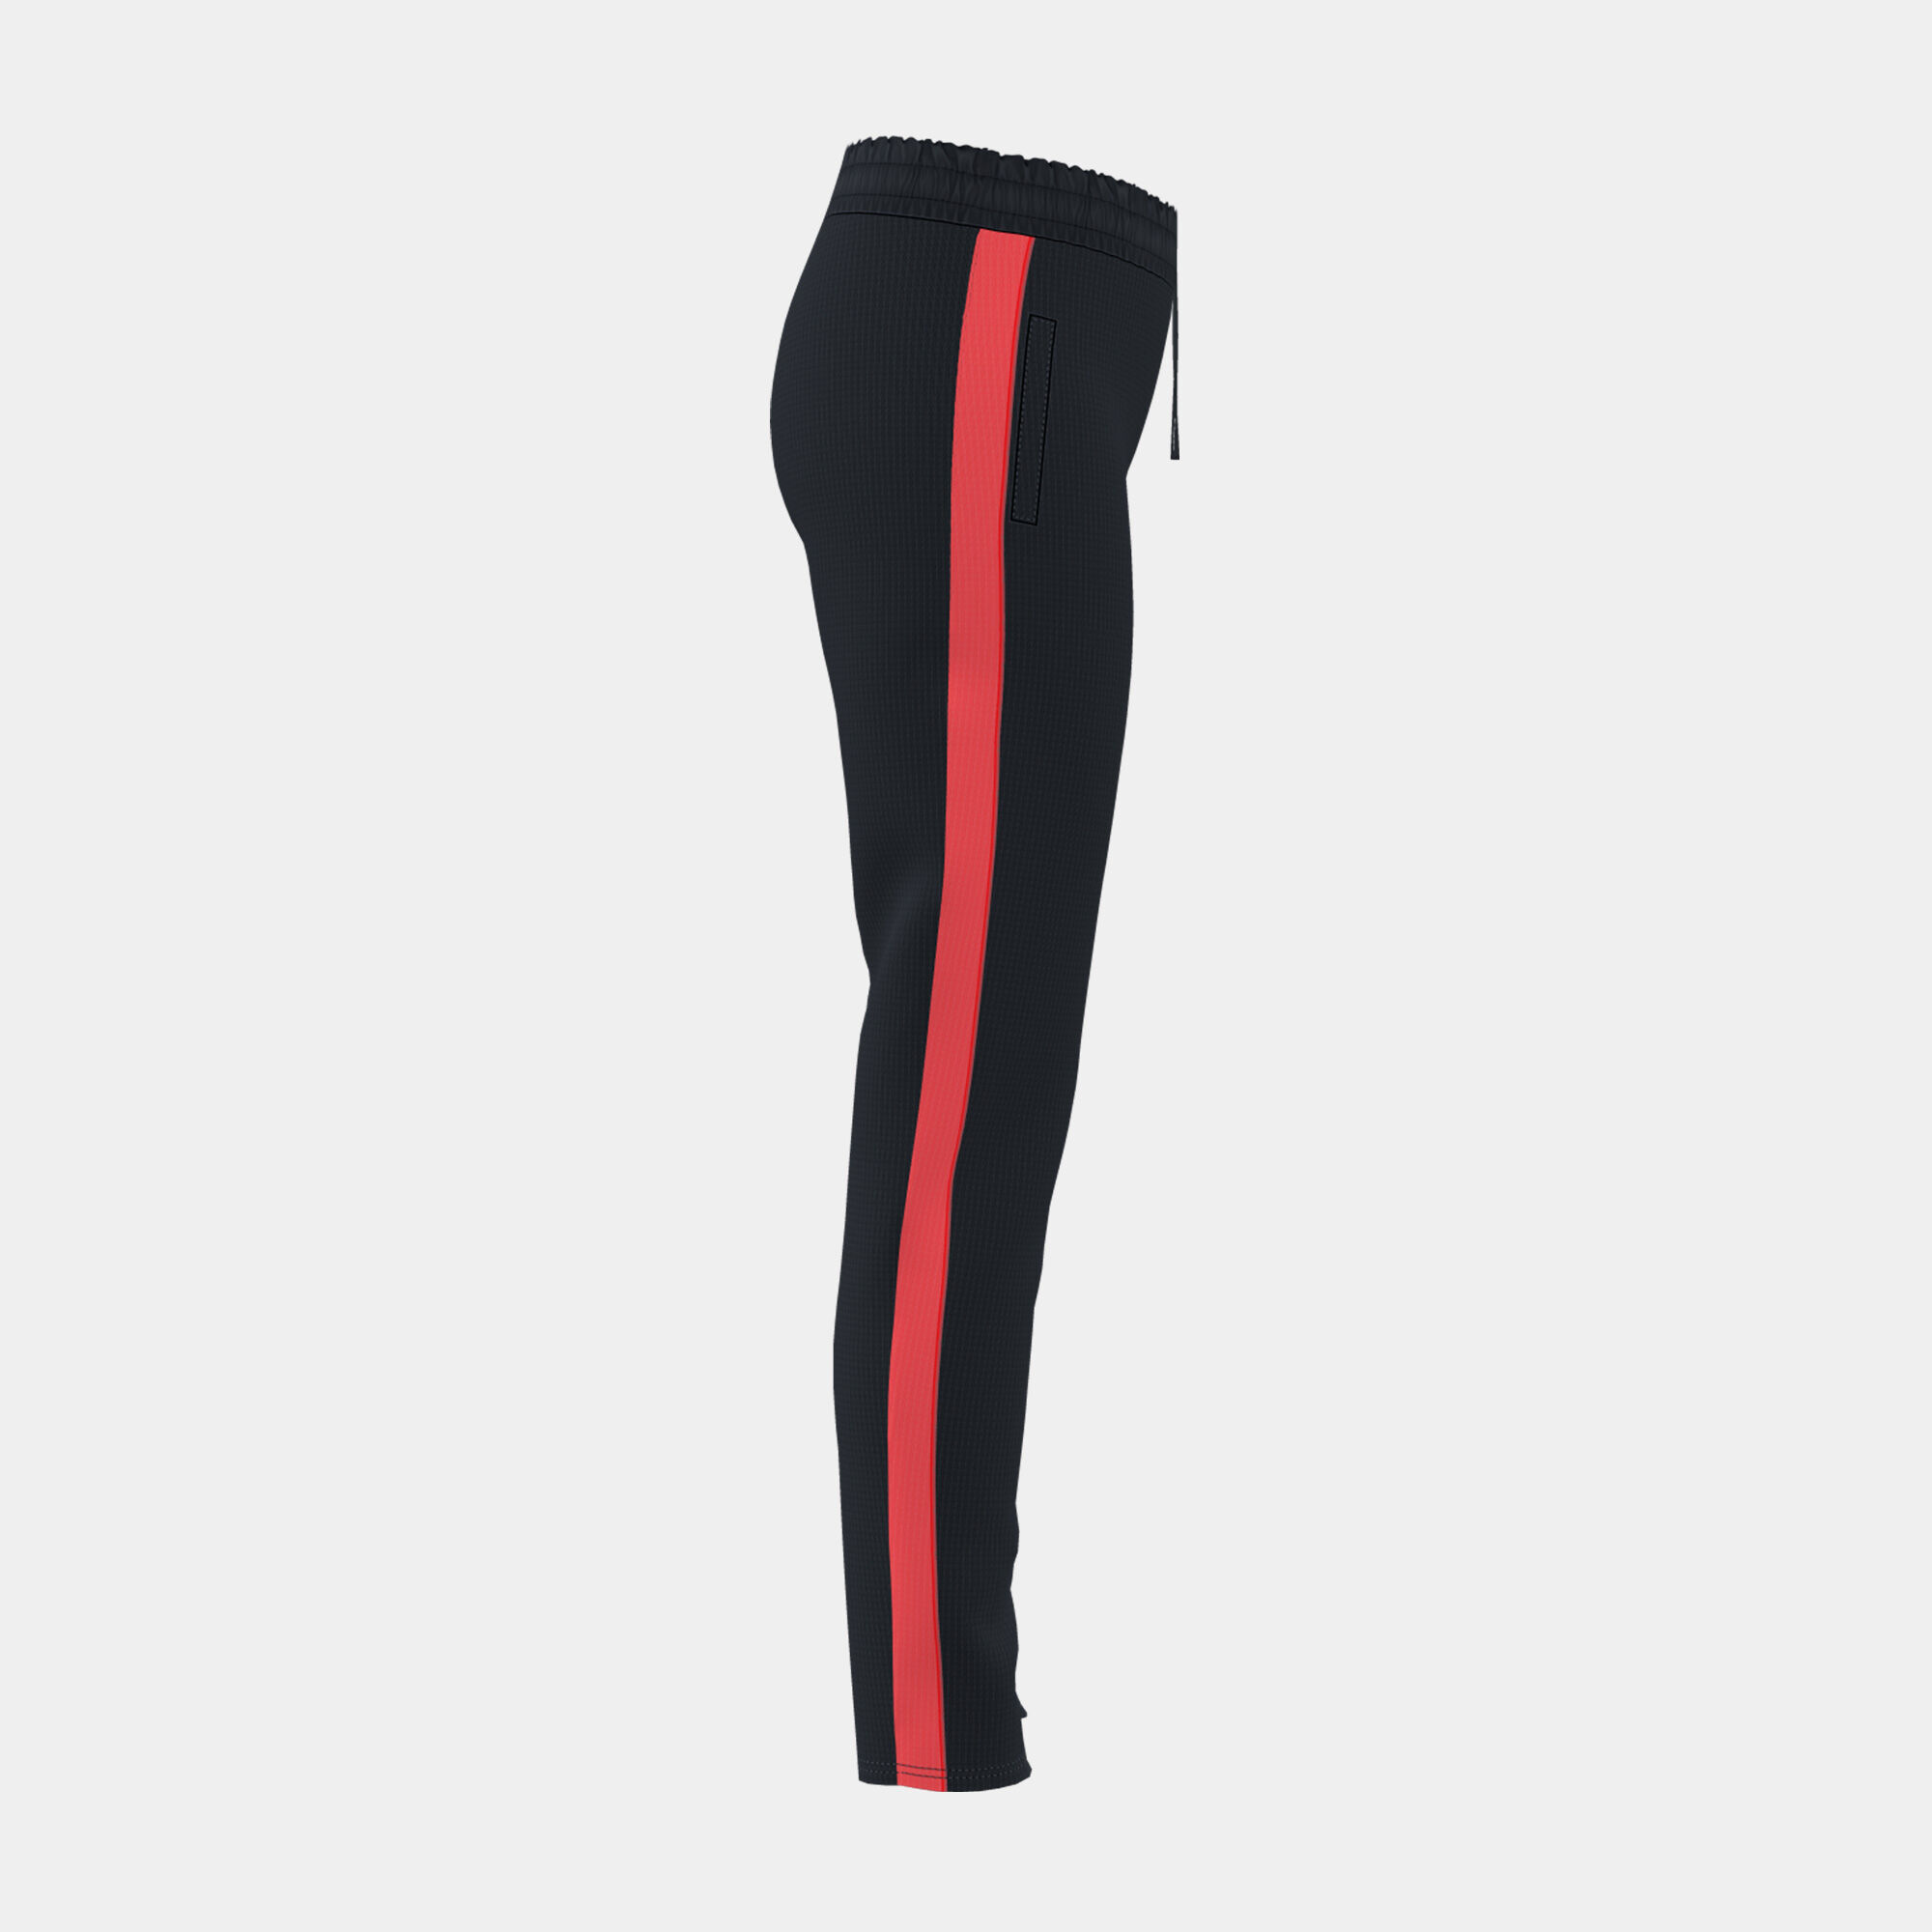 Pantaloni lungi băieȚi Stripe negru coral fosforescent